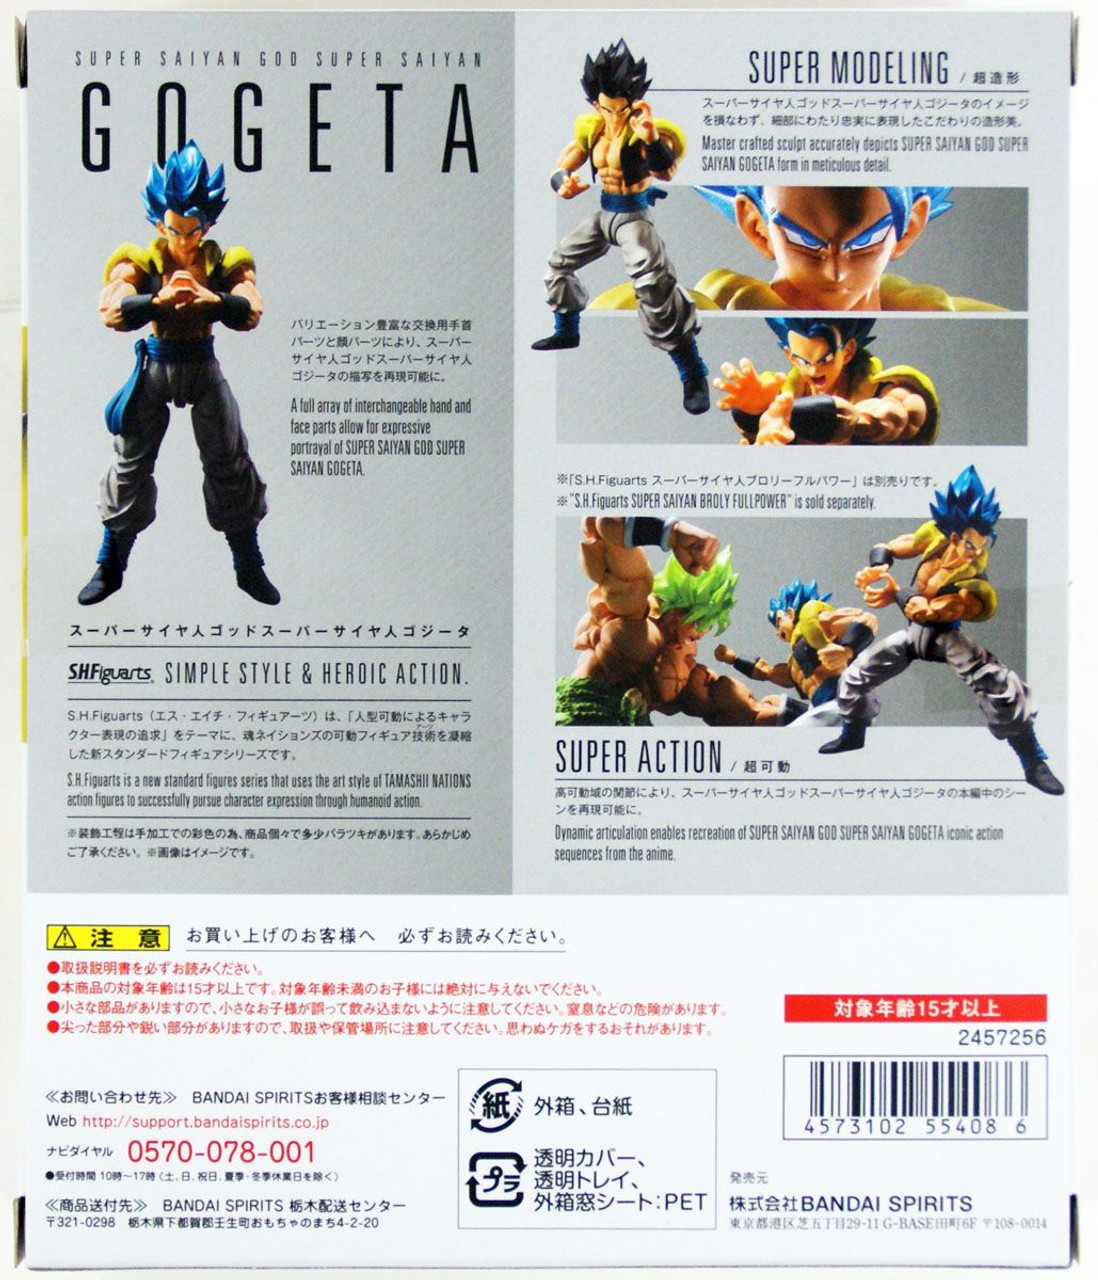 Dragon Ball Super S.H.Figuarts Super Saiyan God Super Saiyan Gogeta Action  Figure